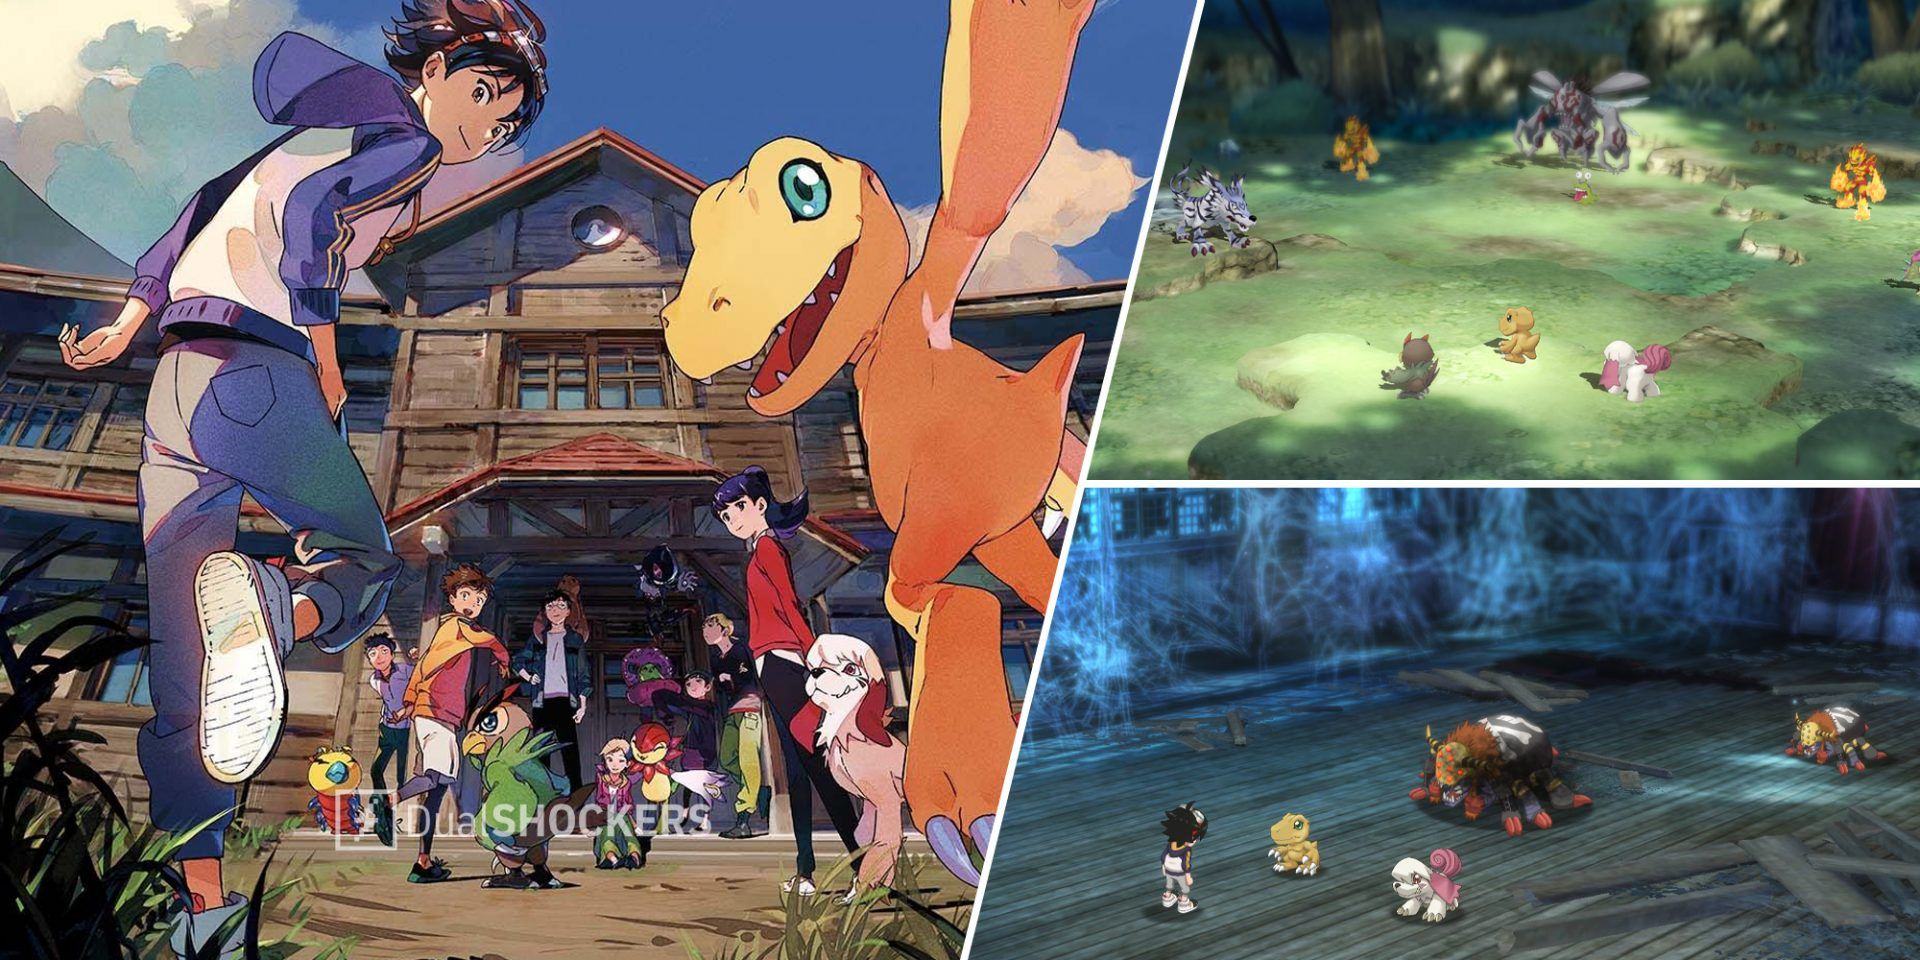 Digimon Survive Takuma Momozuka and Agumon on left, Digimon Survive gameplay on top and bottom right